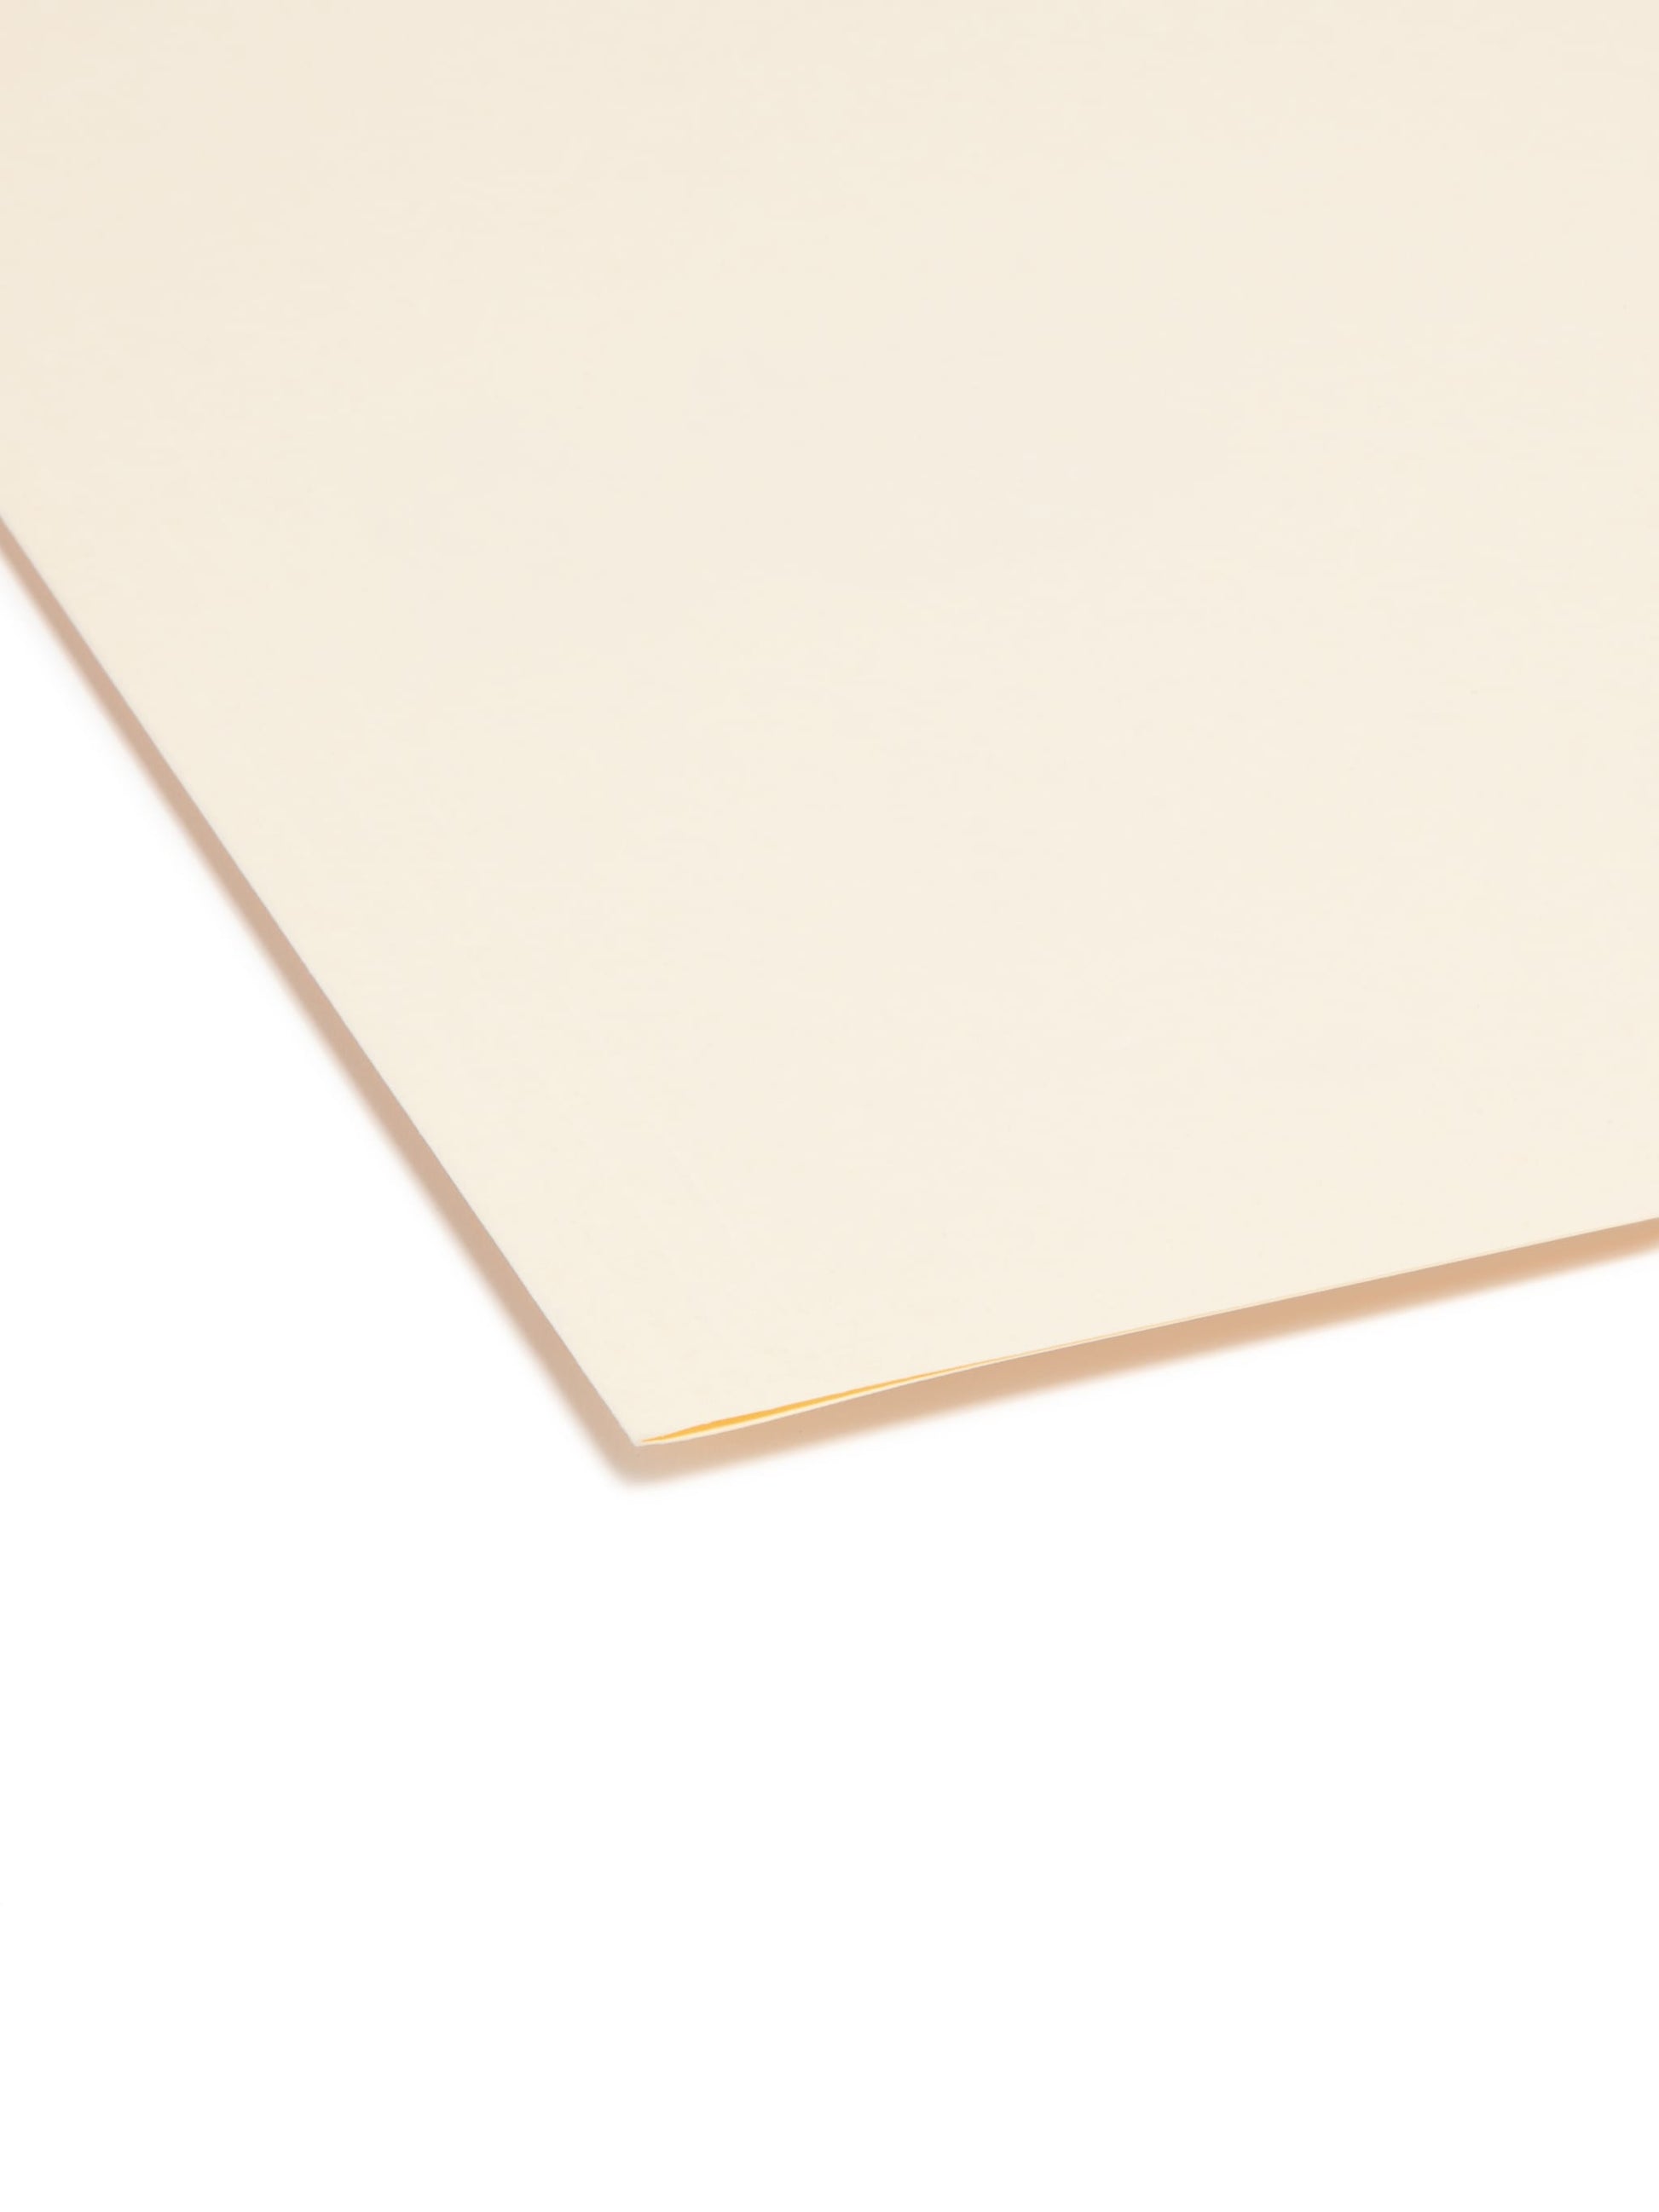 Reinforced Tab File Folders, 1/2-Cut Tab, Manila Color, Legal Size, Set of 100, 086486153263